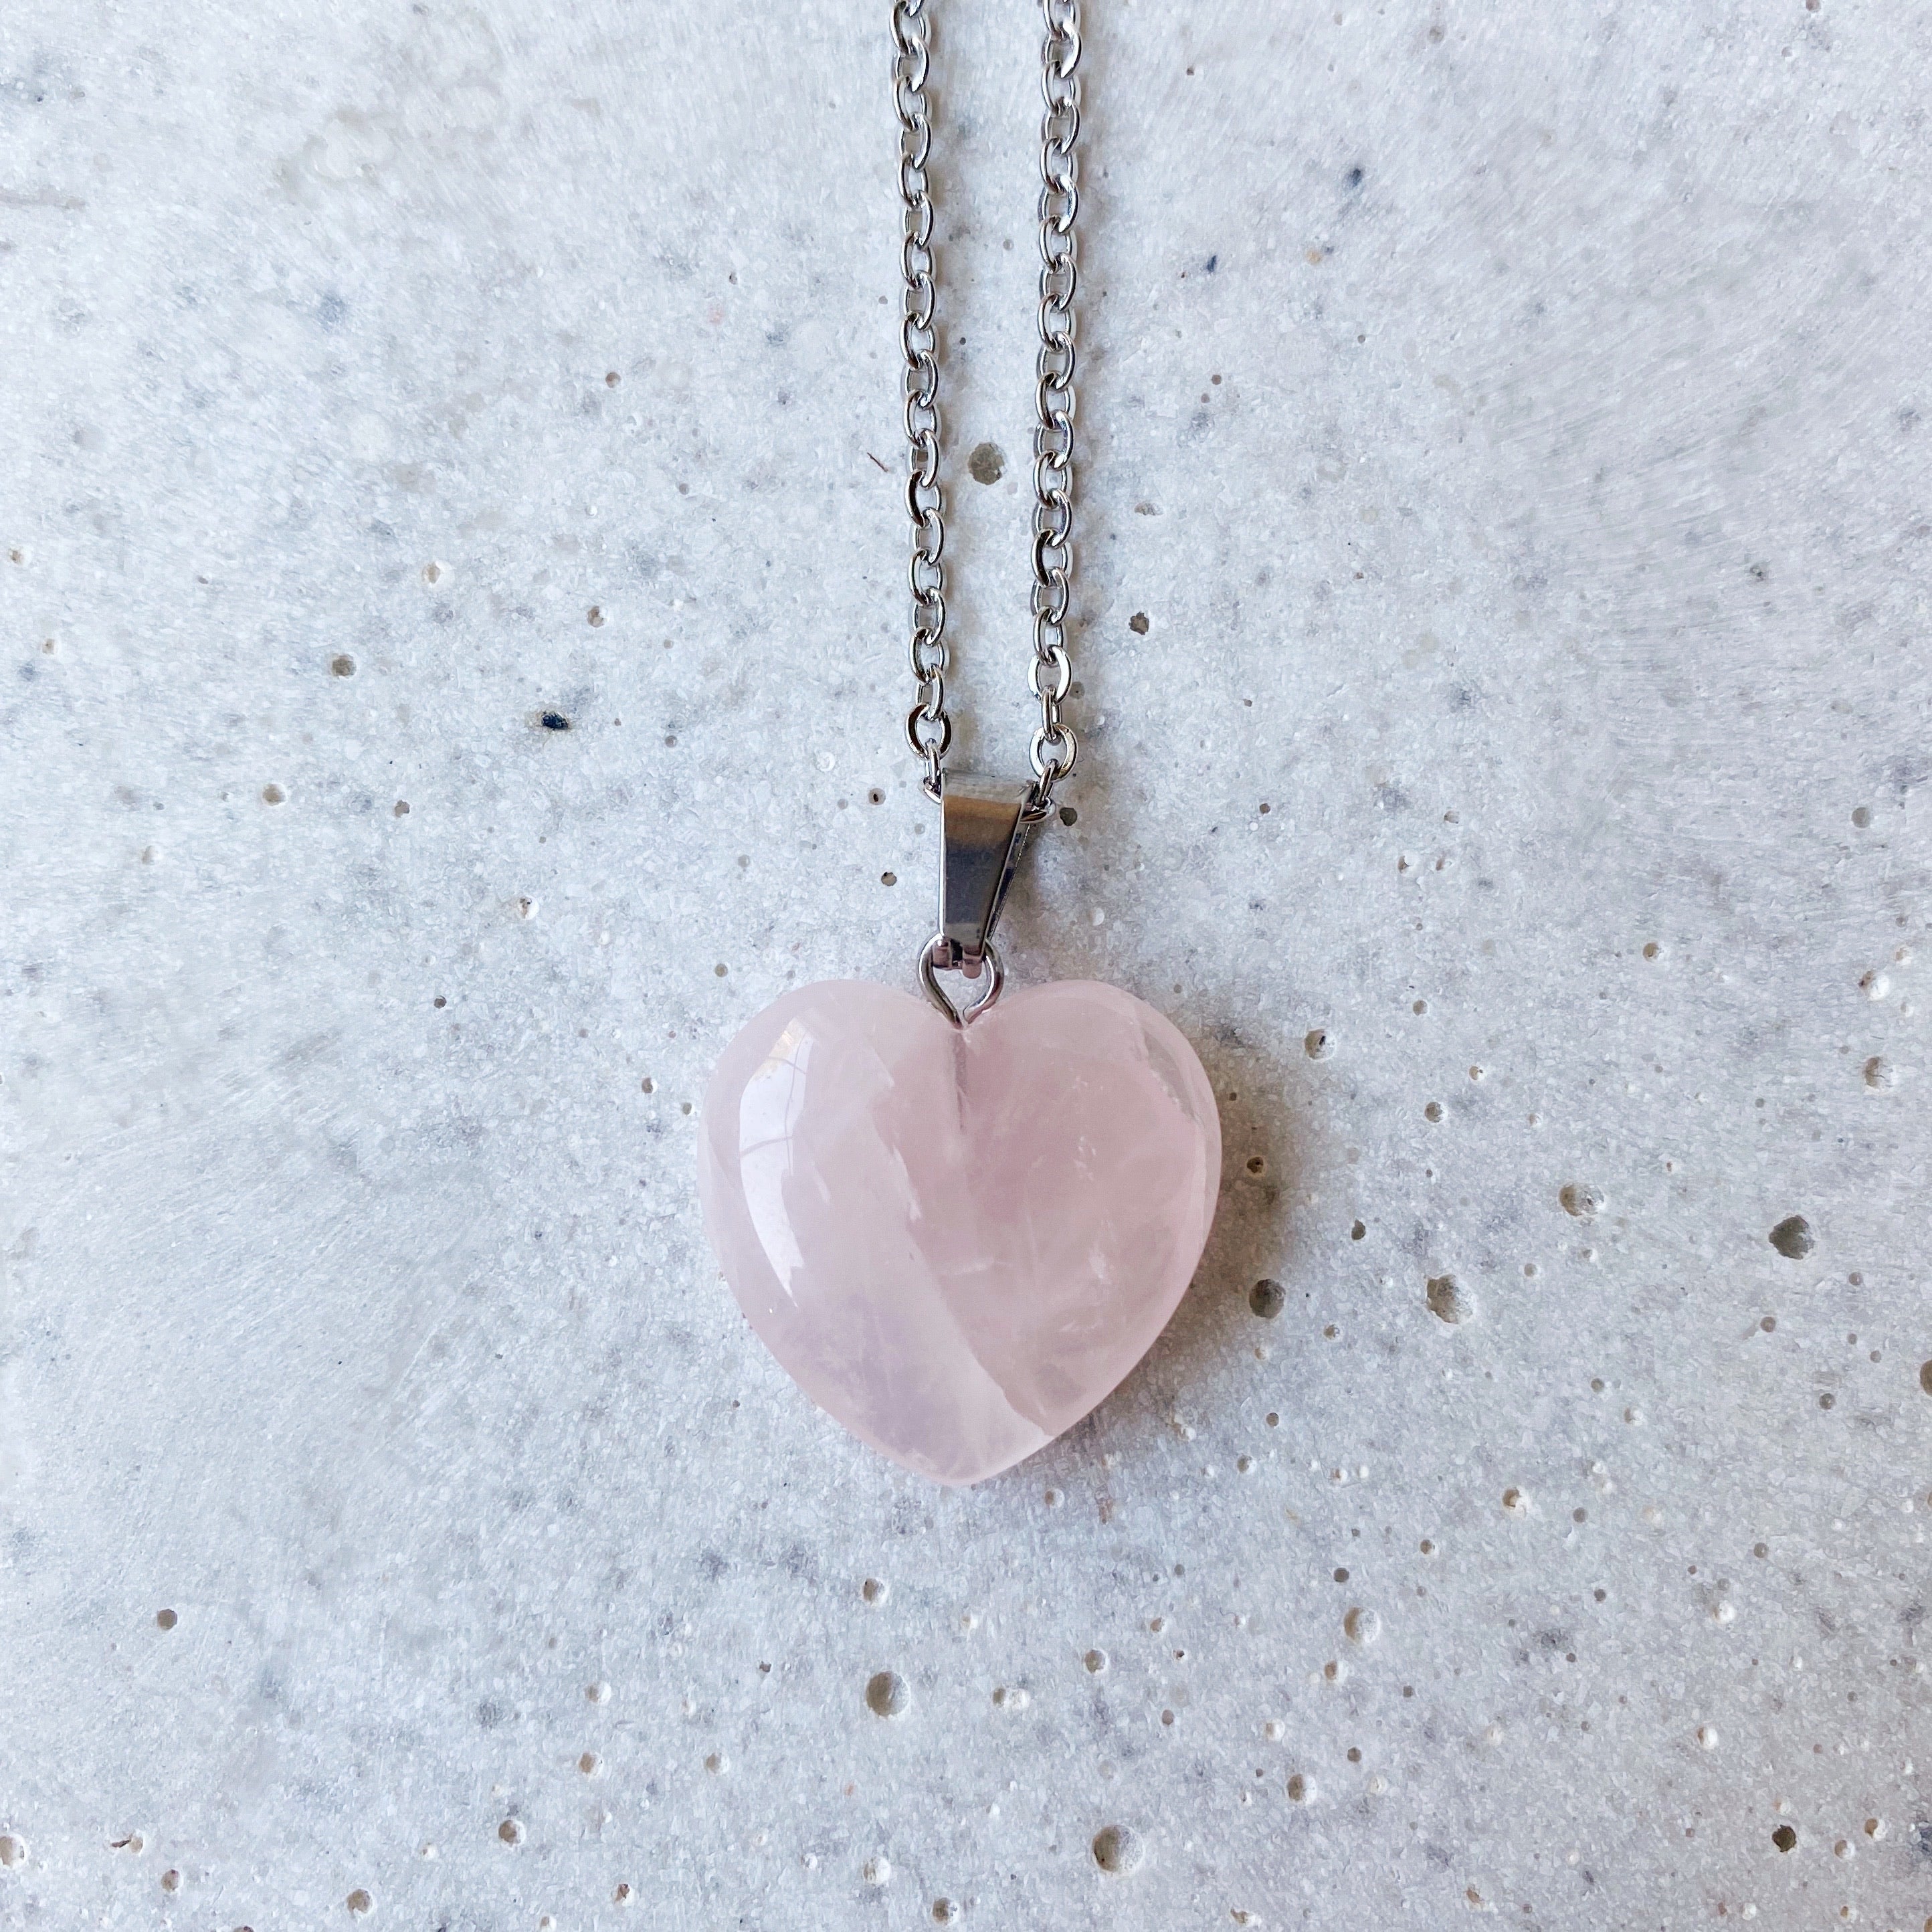 Stone Heart Necklace - Rose Quartz